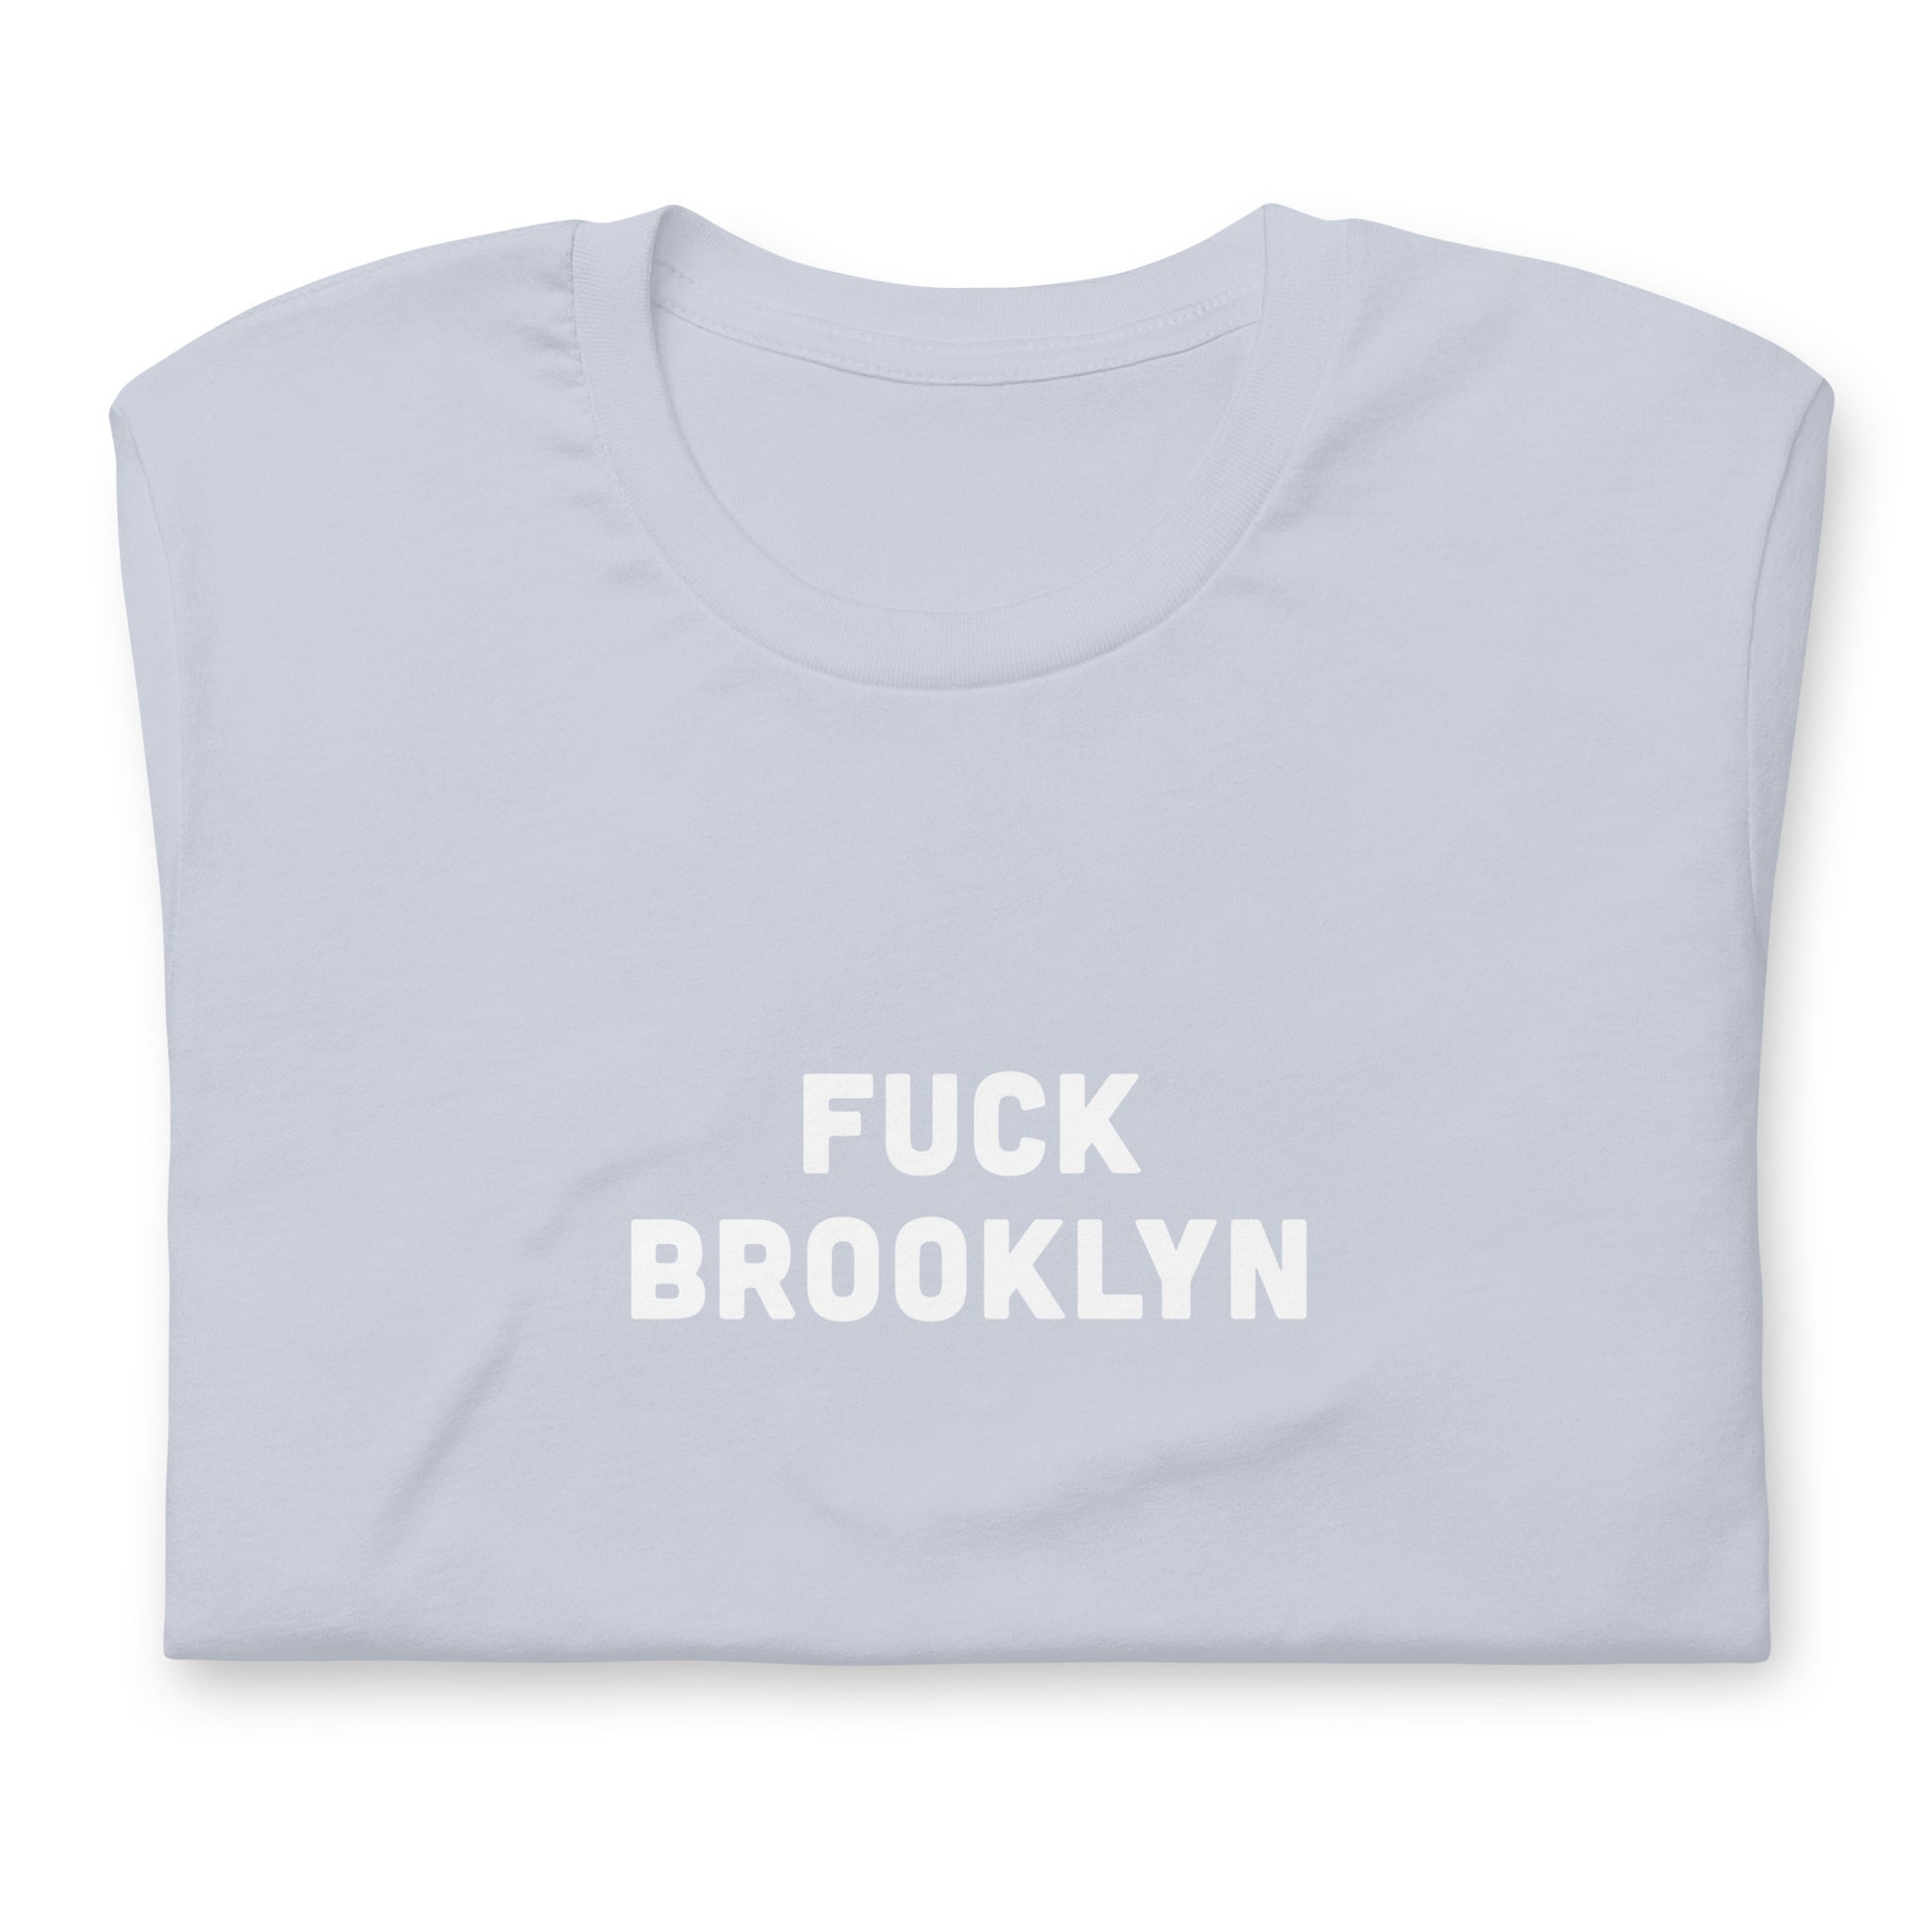 Fuck Brooklyn T-Shirt Size M Color Asphalt